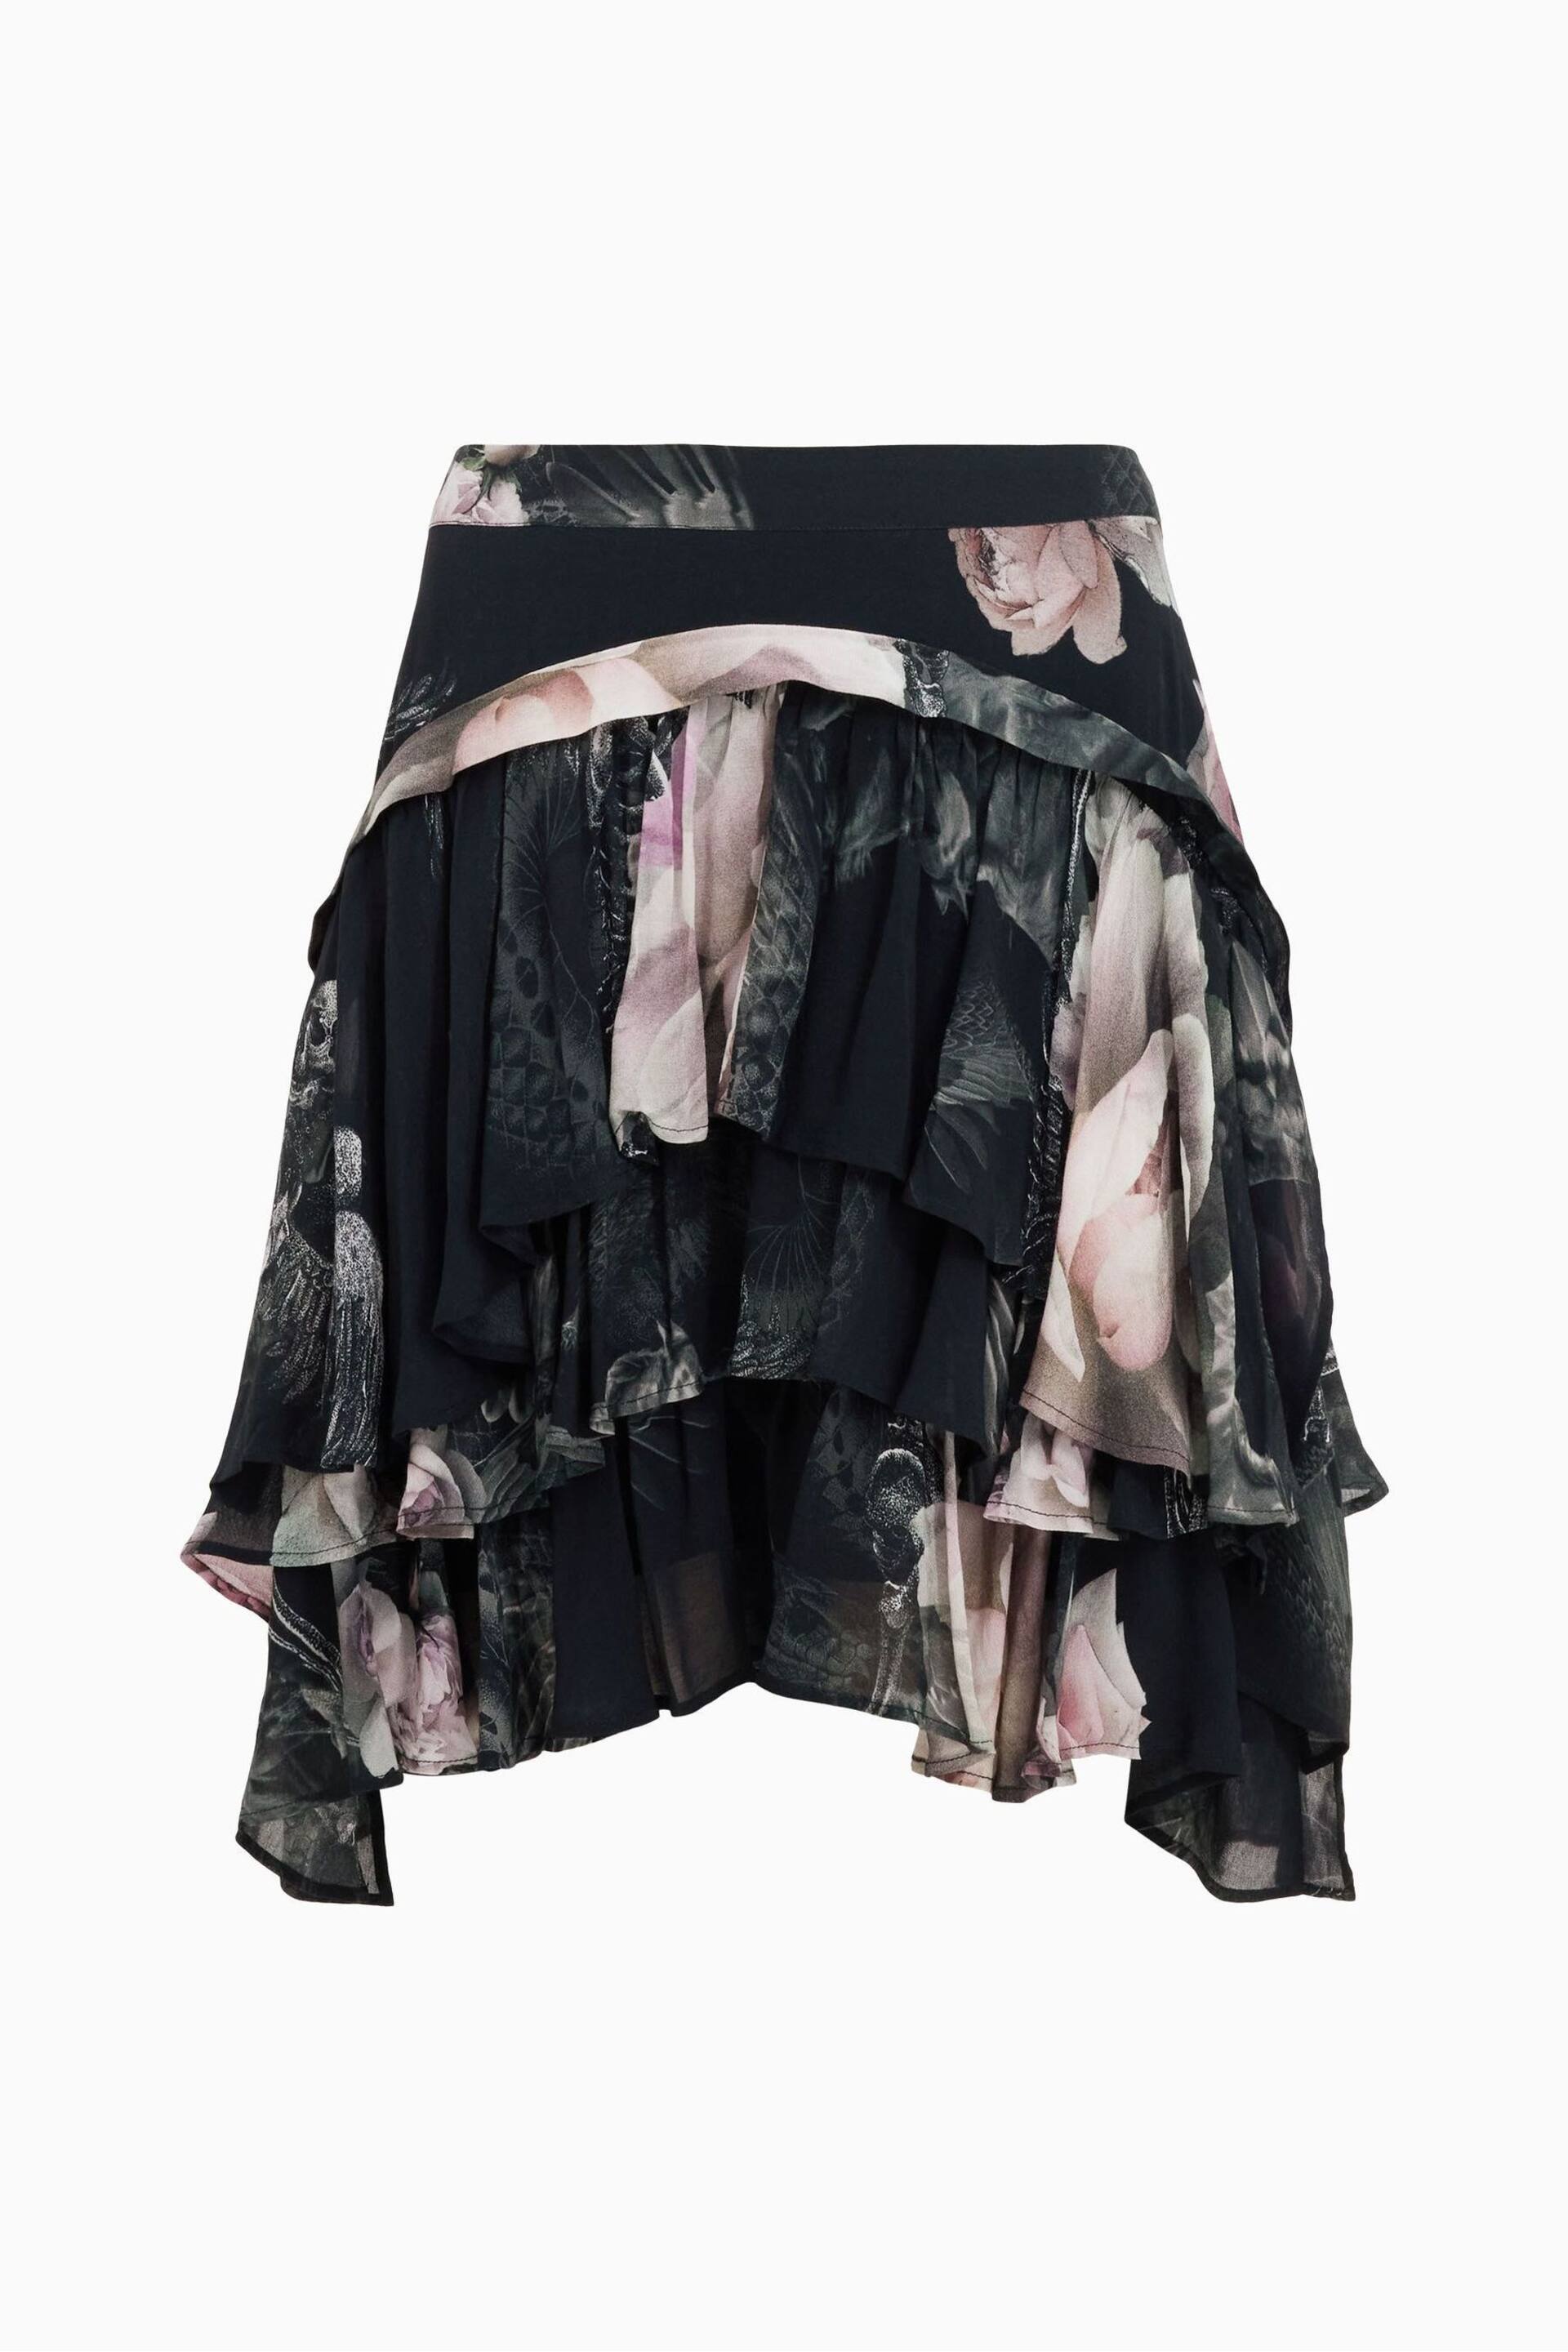 AllSaints Black Cavarly Valley Skirt - Image 6 of 6